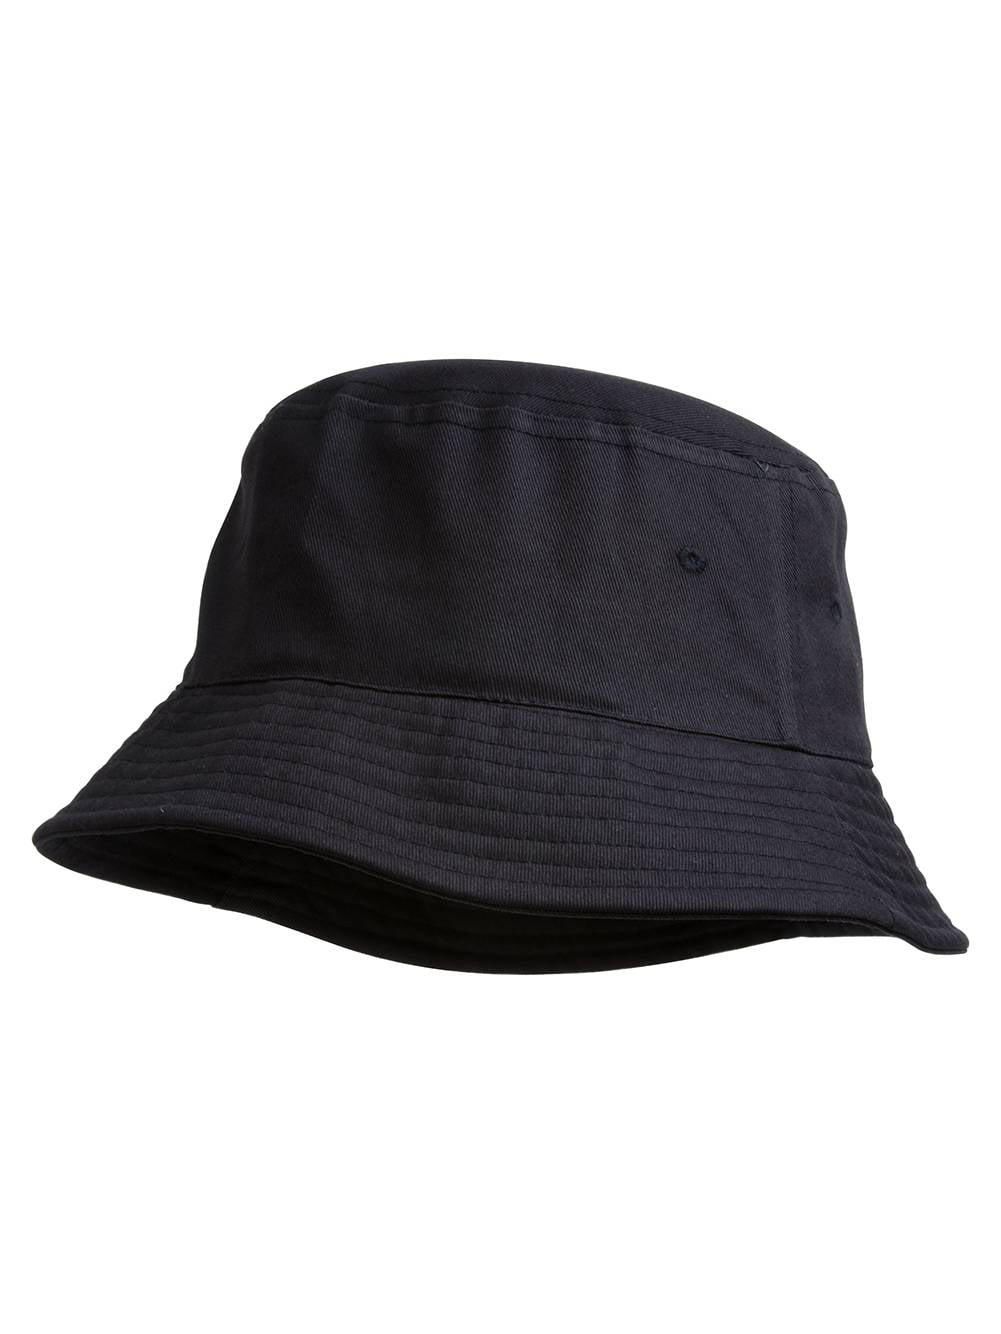 TopHeadwear Blank Cotton Bucket Hat - Navy - Large/X-Large